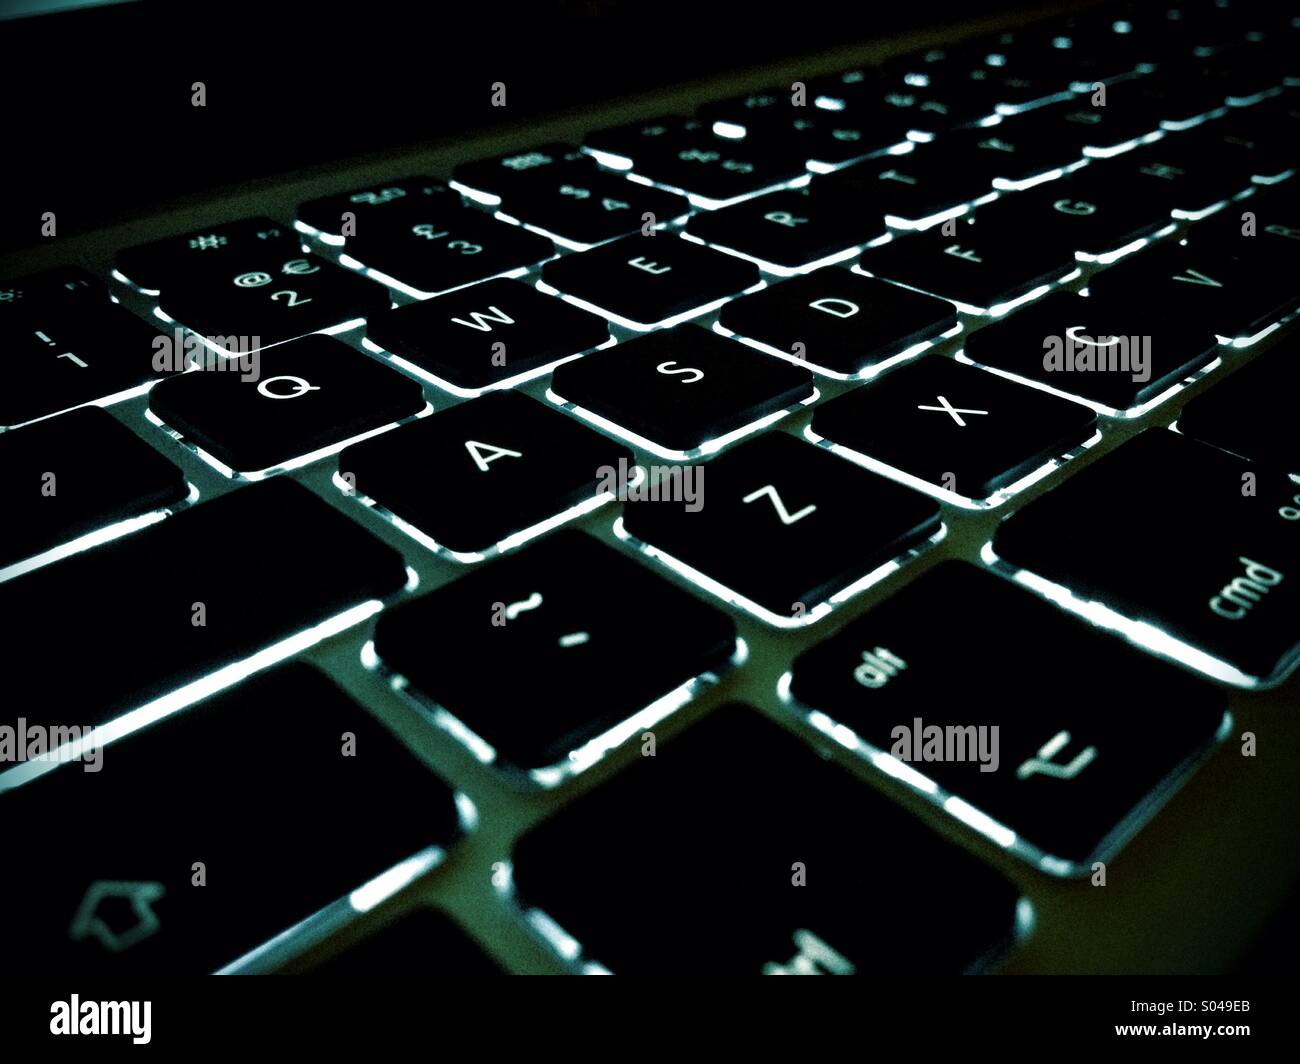 Apple tastiera retroilluminata Foto stock - Alamy